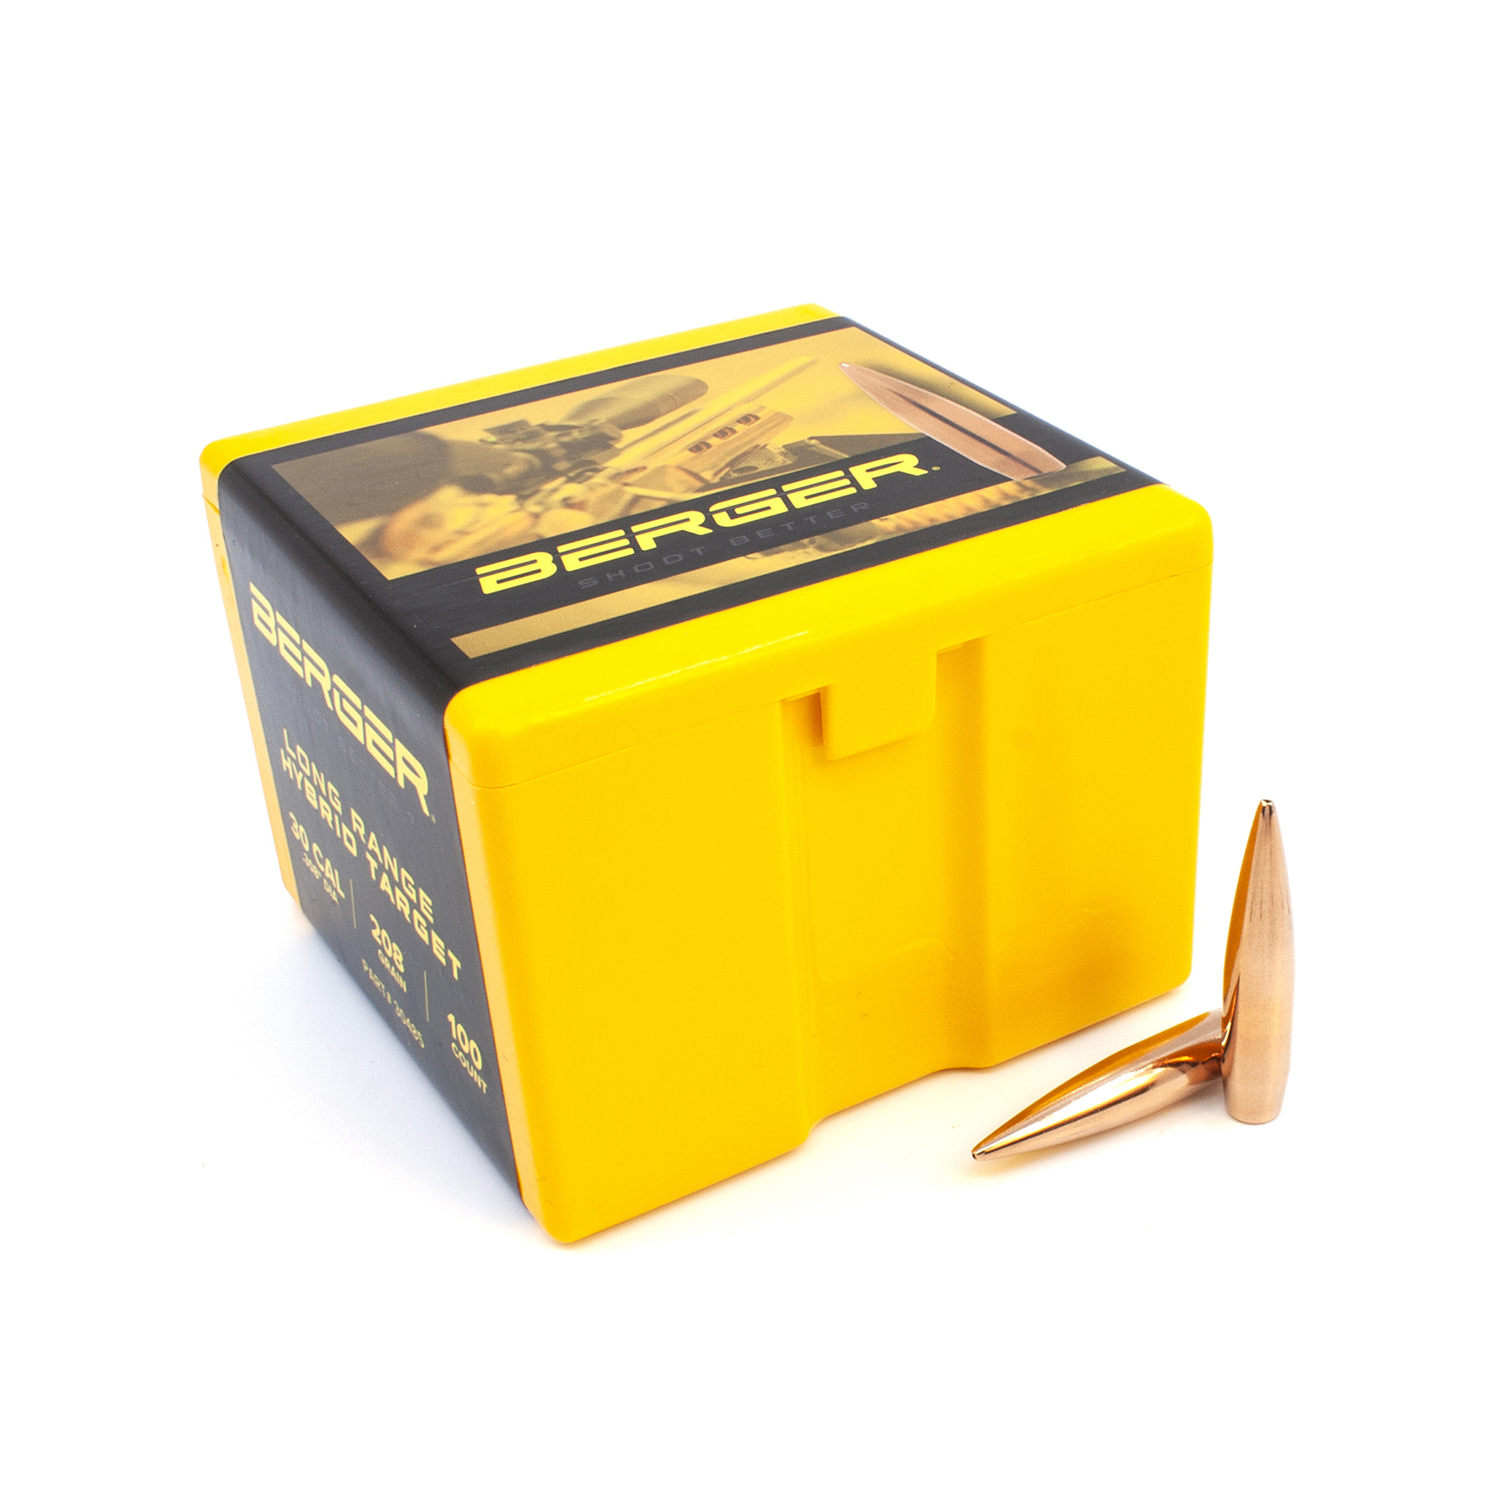 Berger Bullets - .30cal 208gr LR Hybrid Target - Box of 100